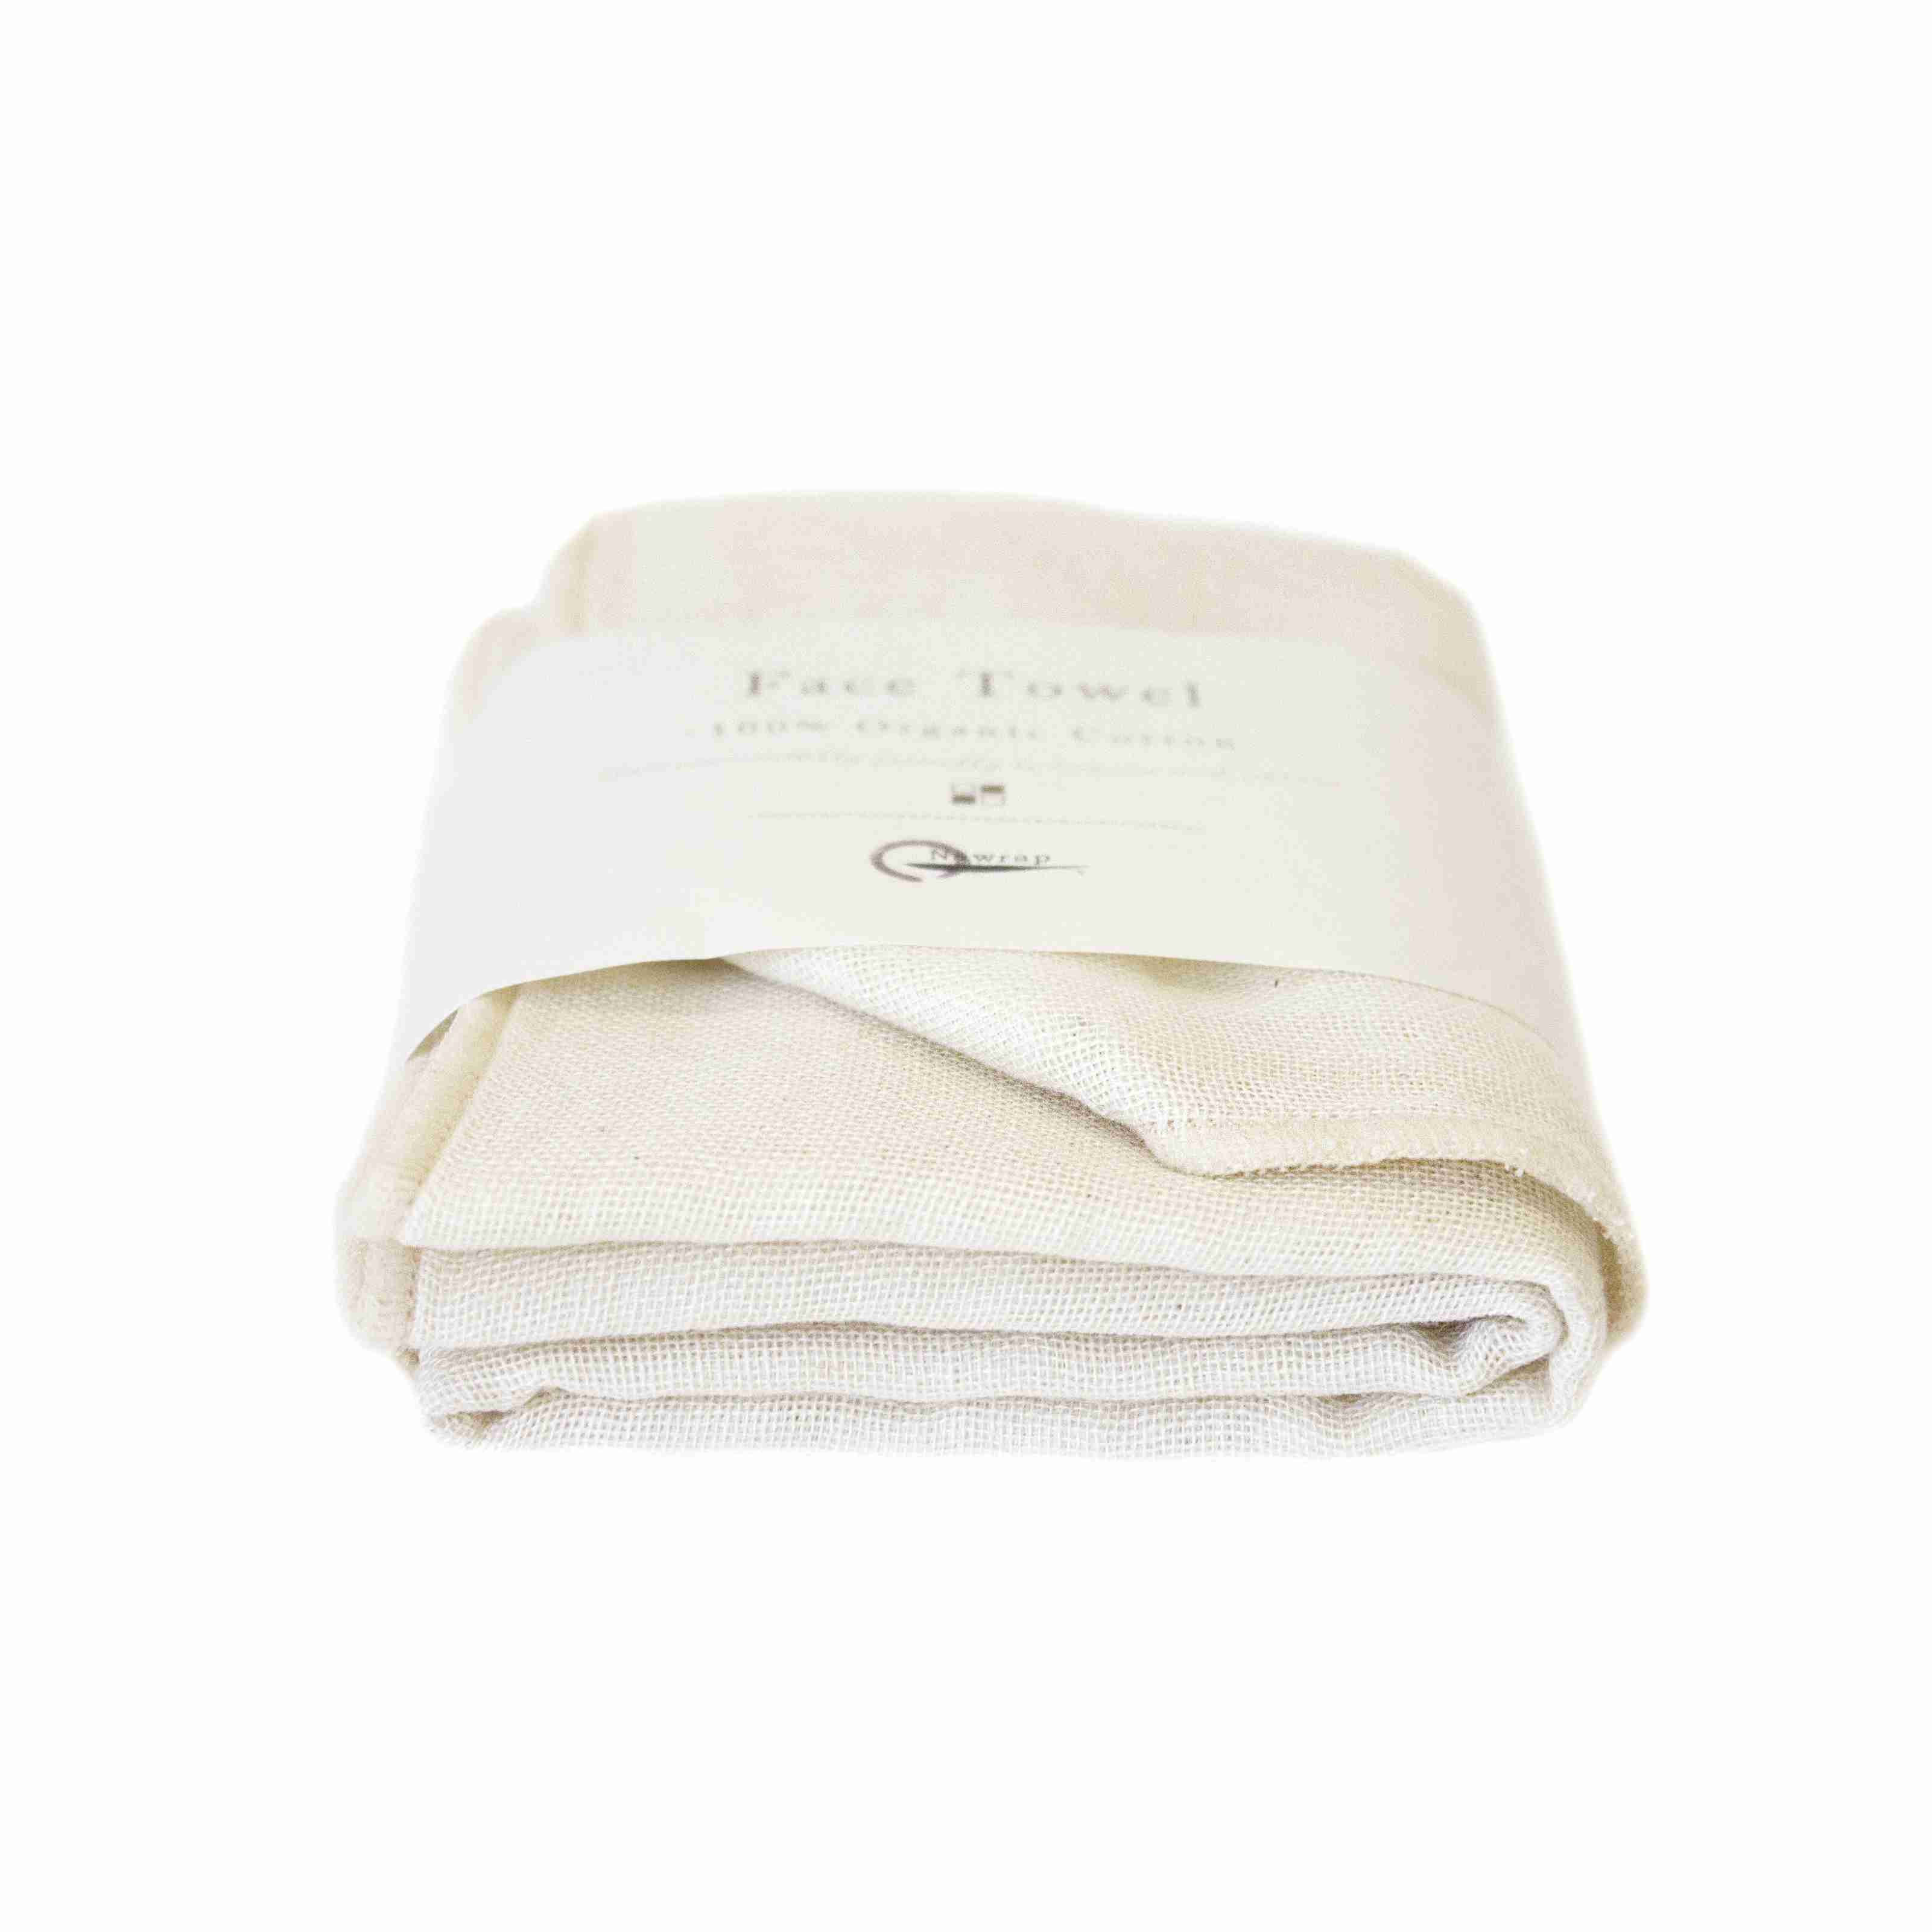 Organic Cotton Face Towel Series-Japan-Japan-Best.net-Brown-Japan-Best.net